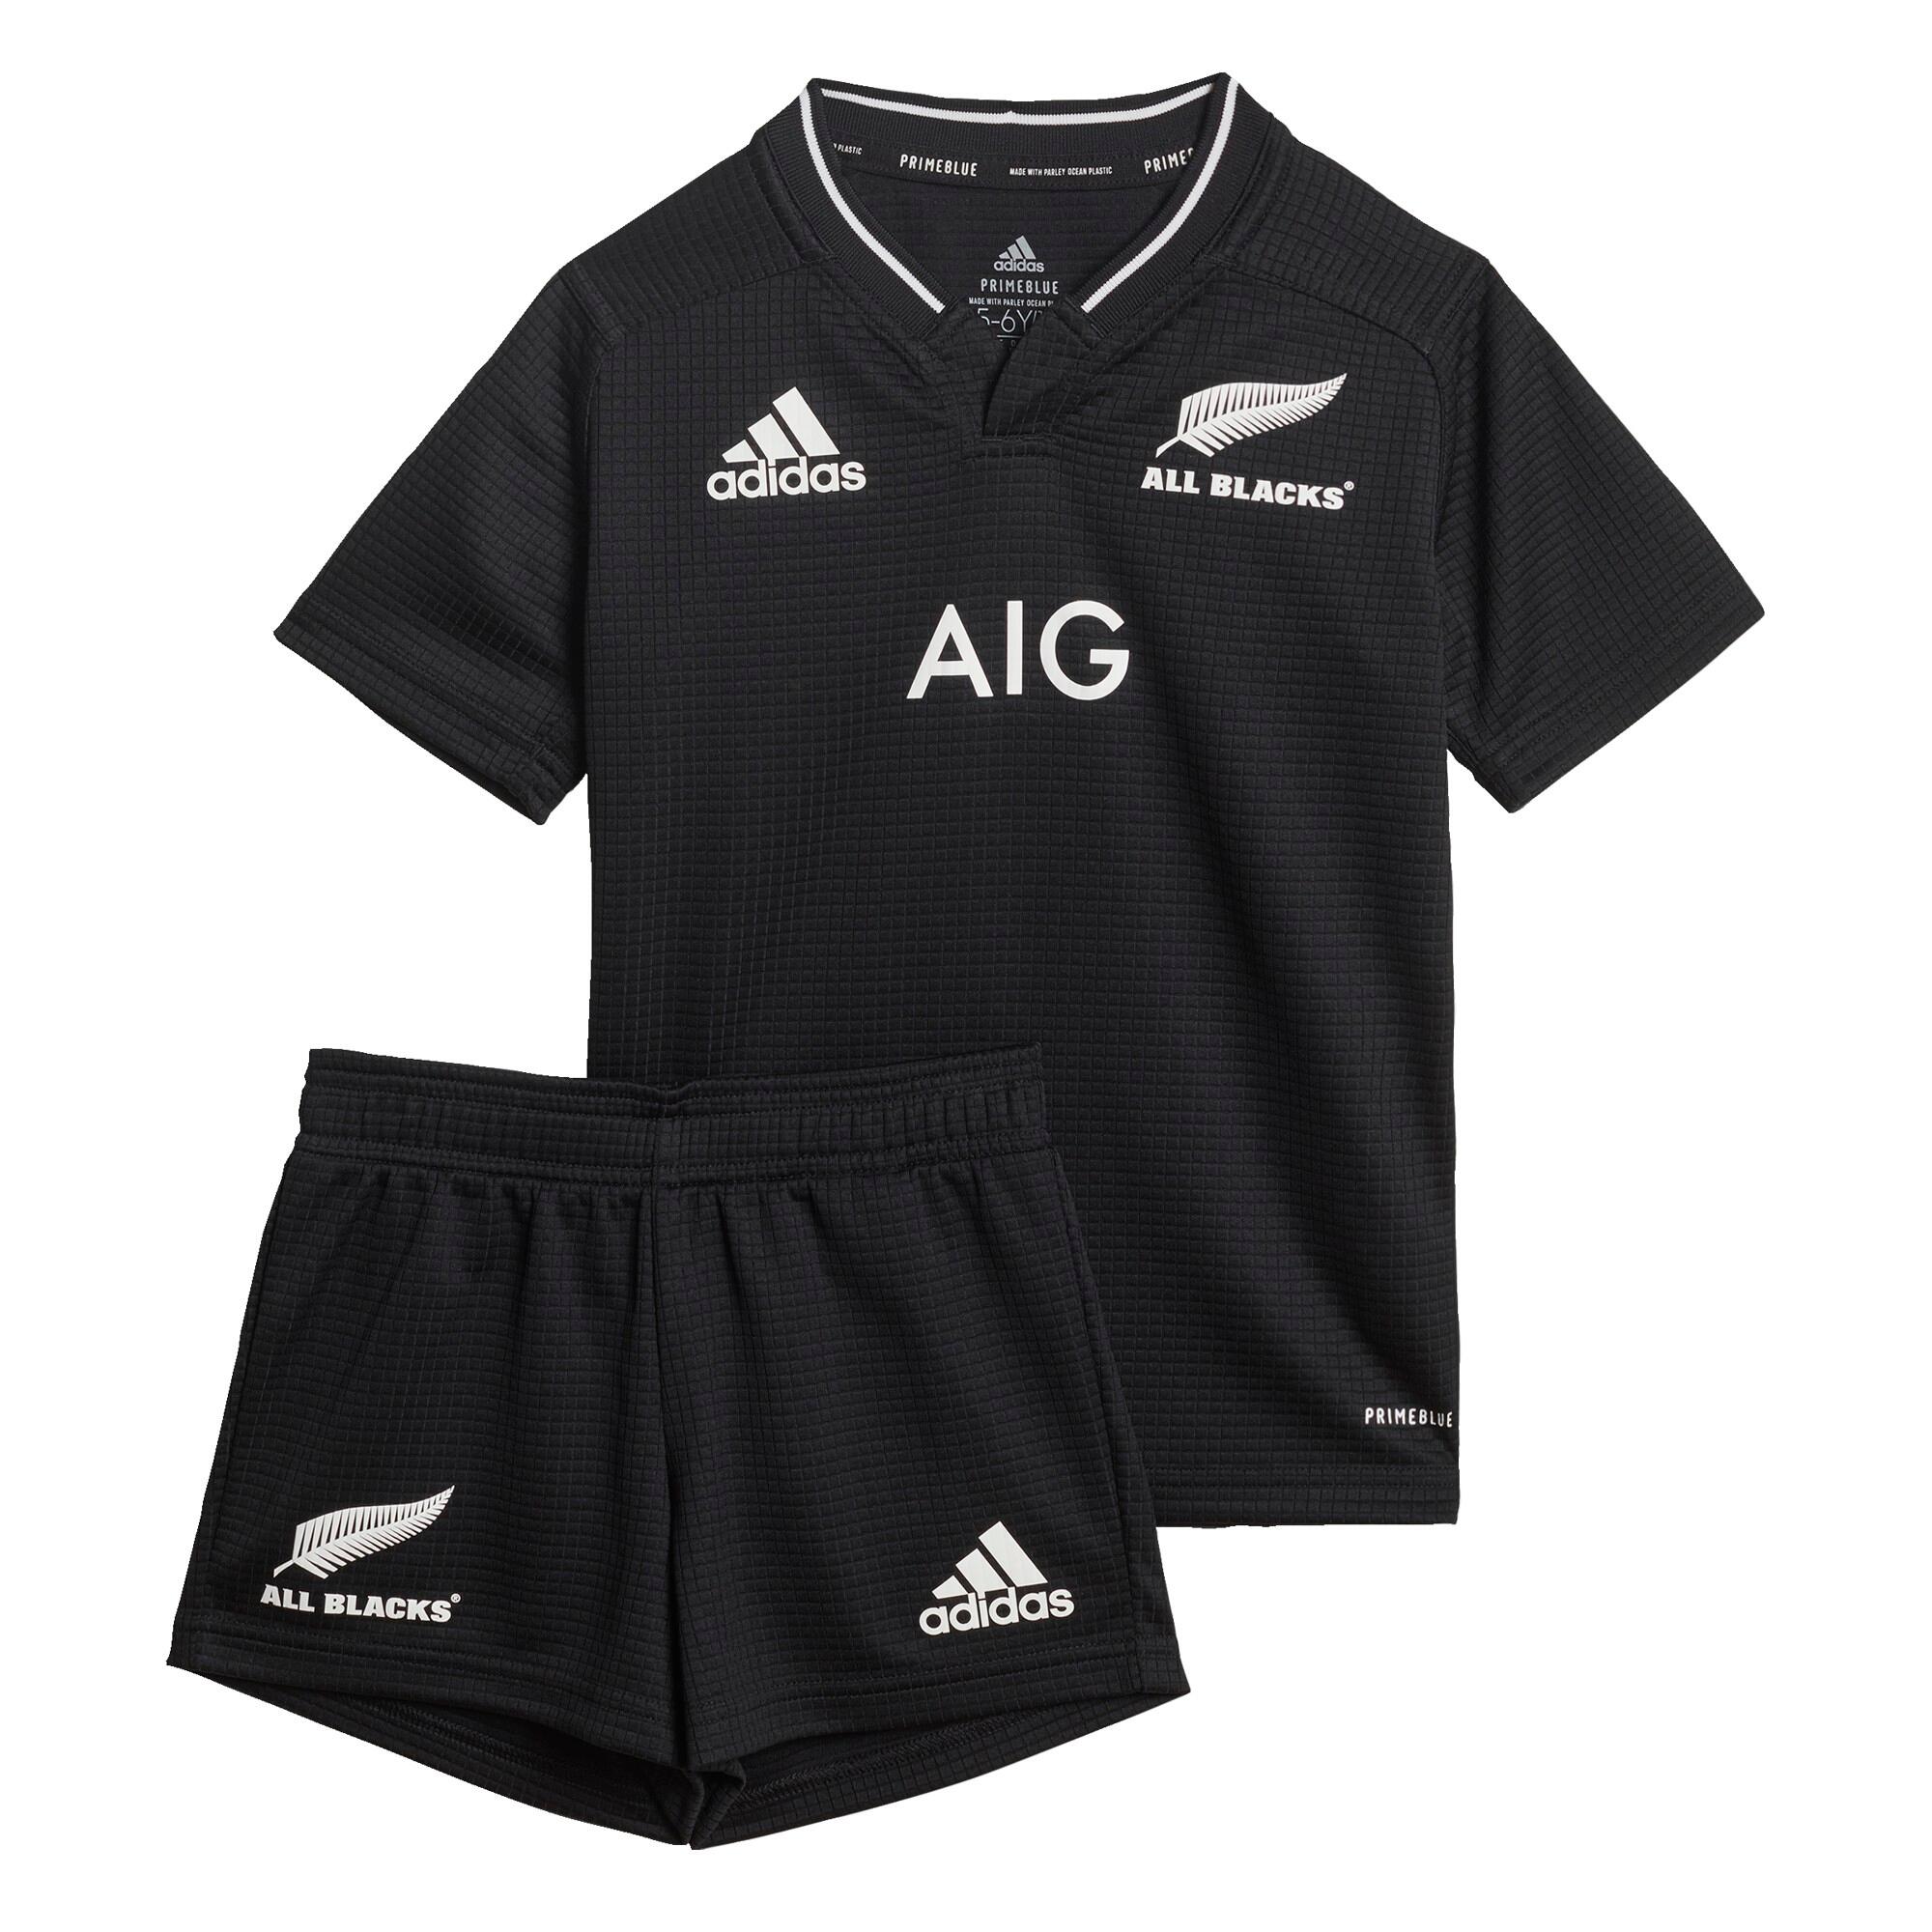 All Blacks Rugby Primeblue Replica Home Mini Kit 2/5